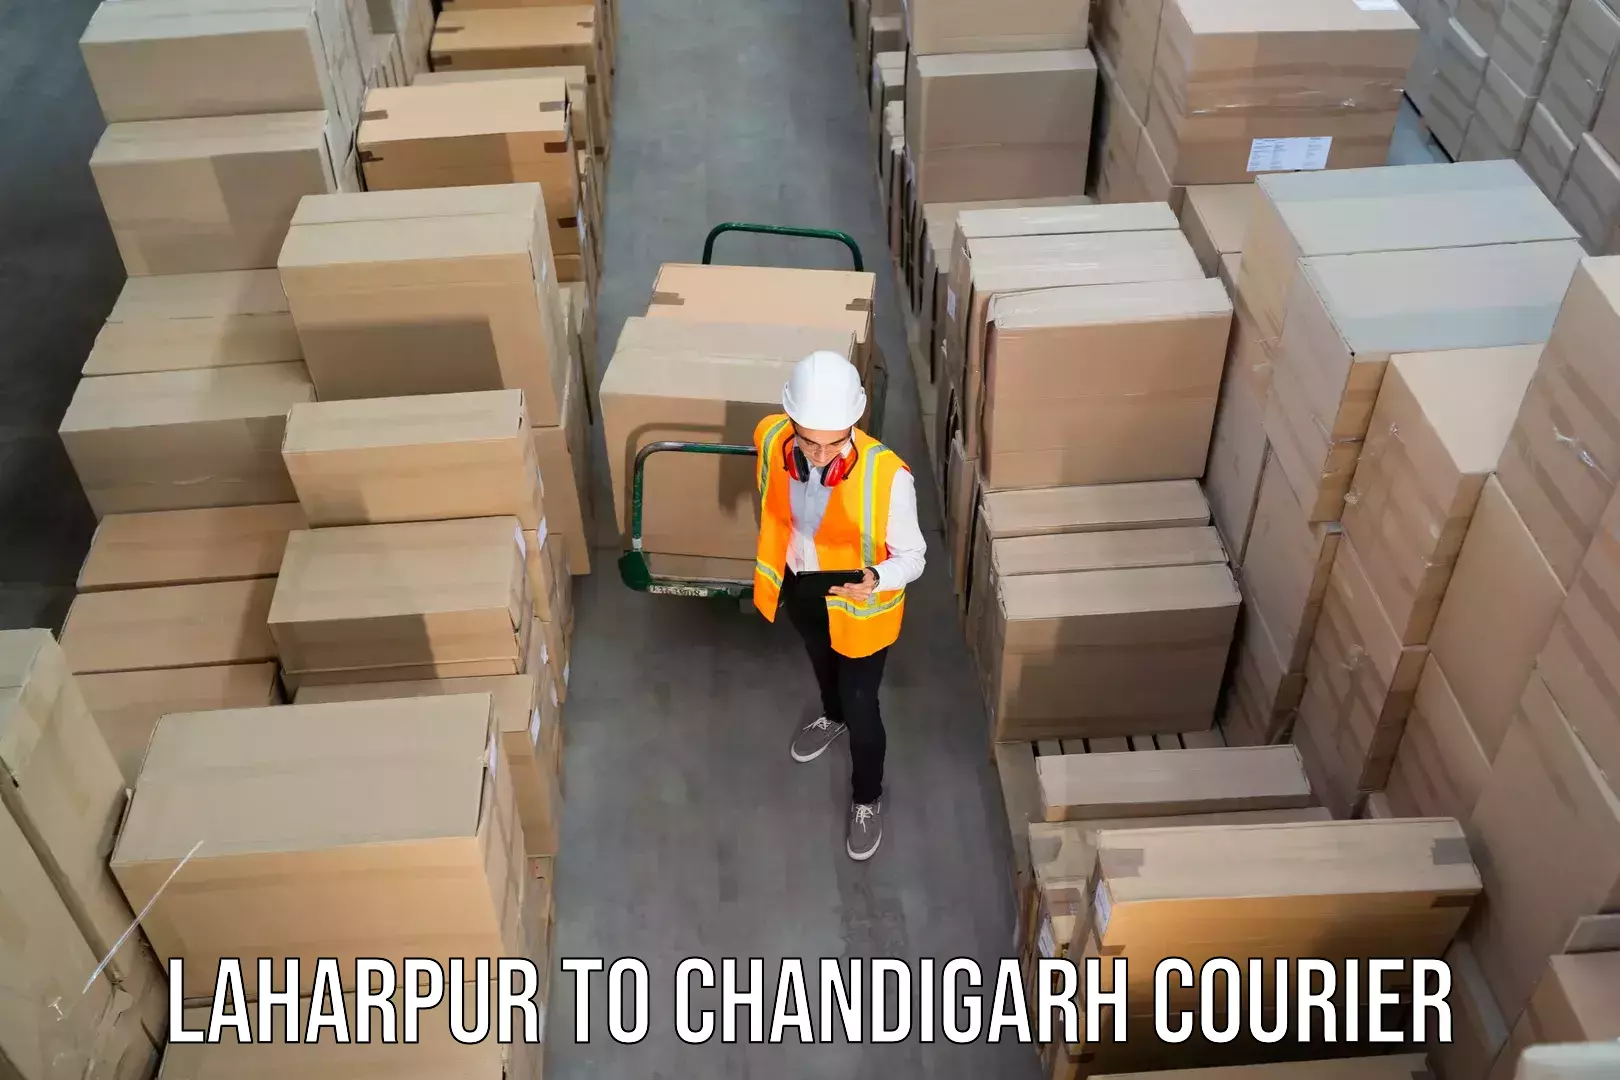 Cash on delivery service Laharpur to Panjab University Chandigarh